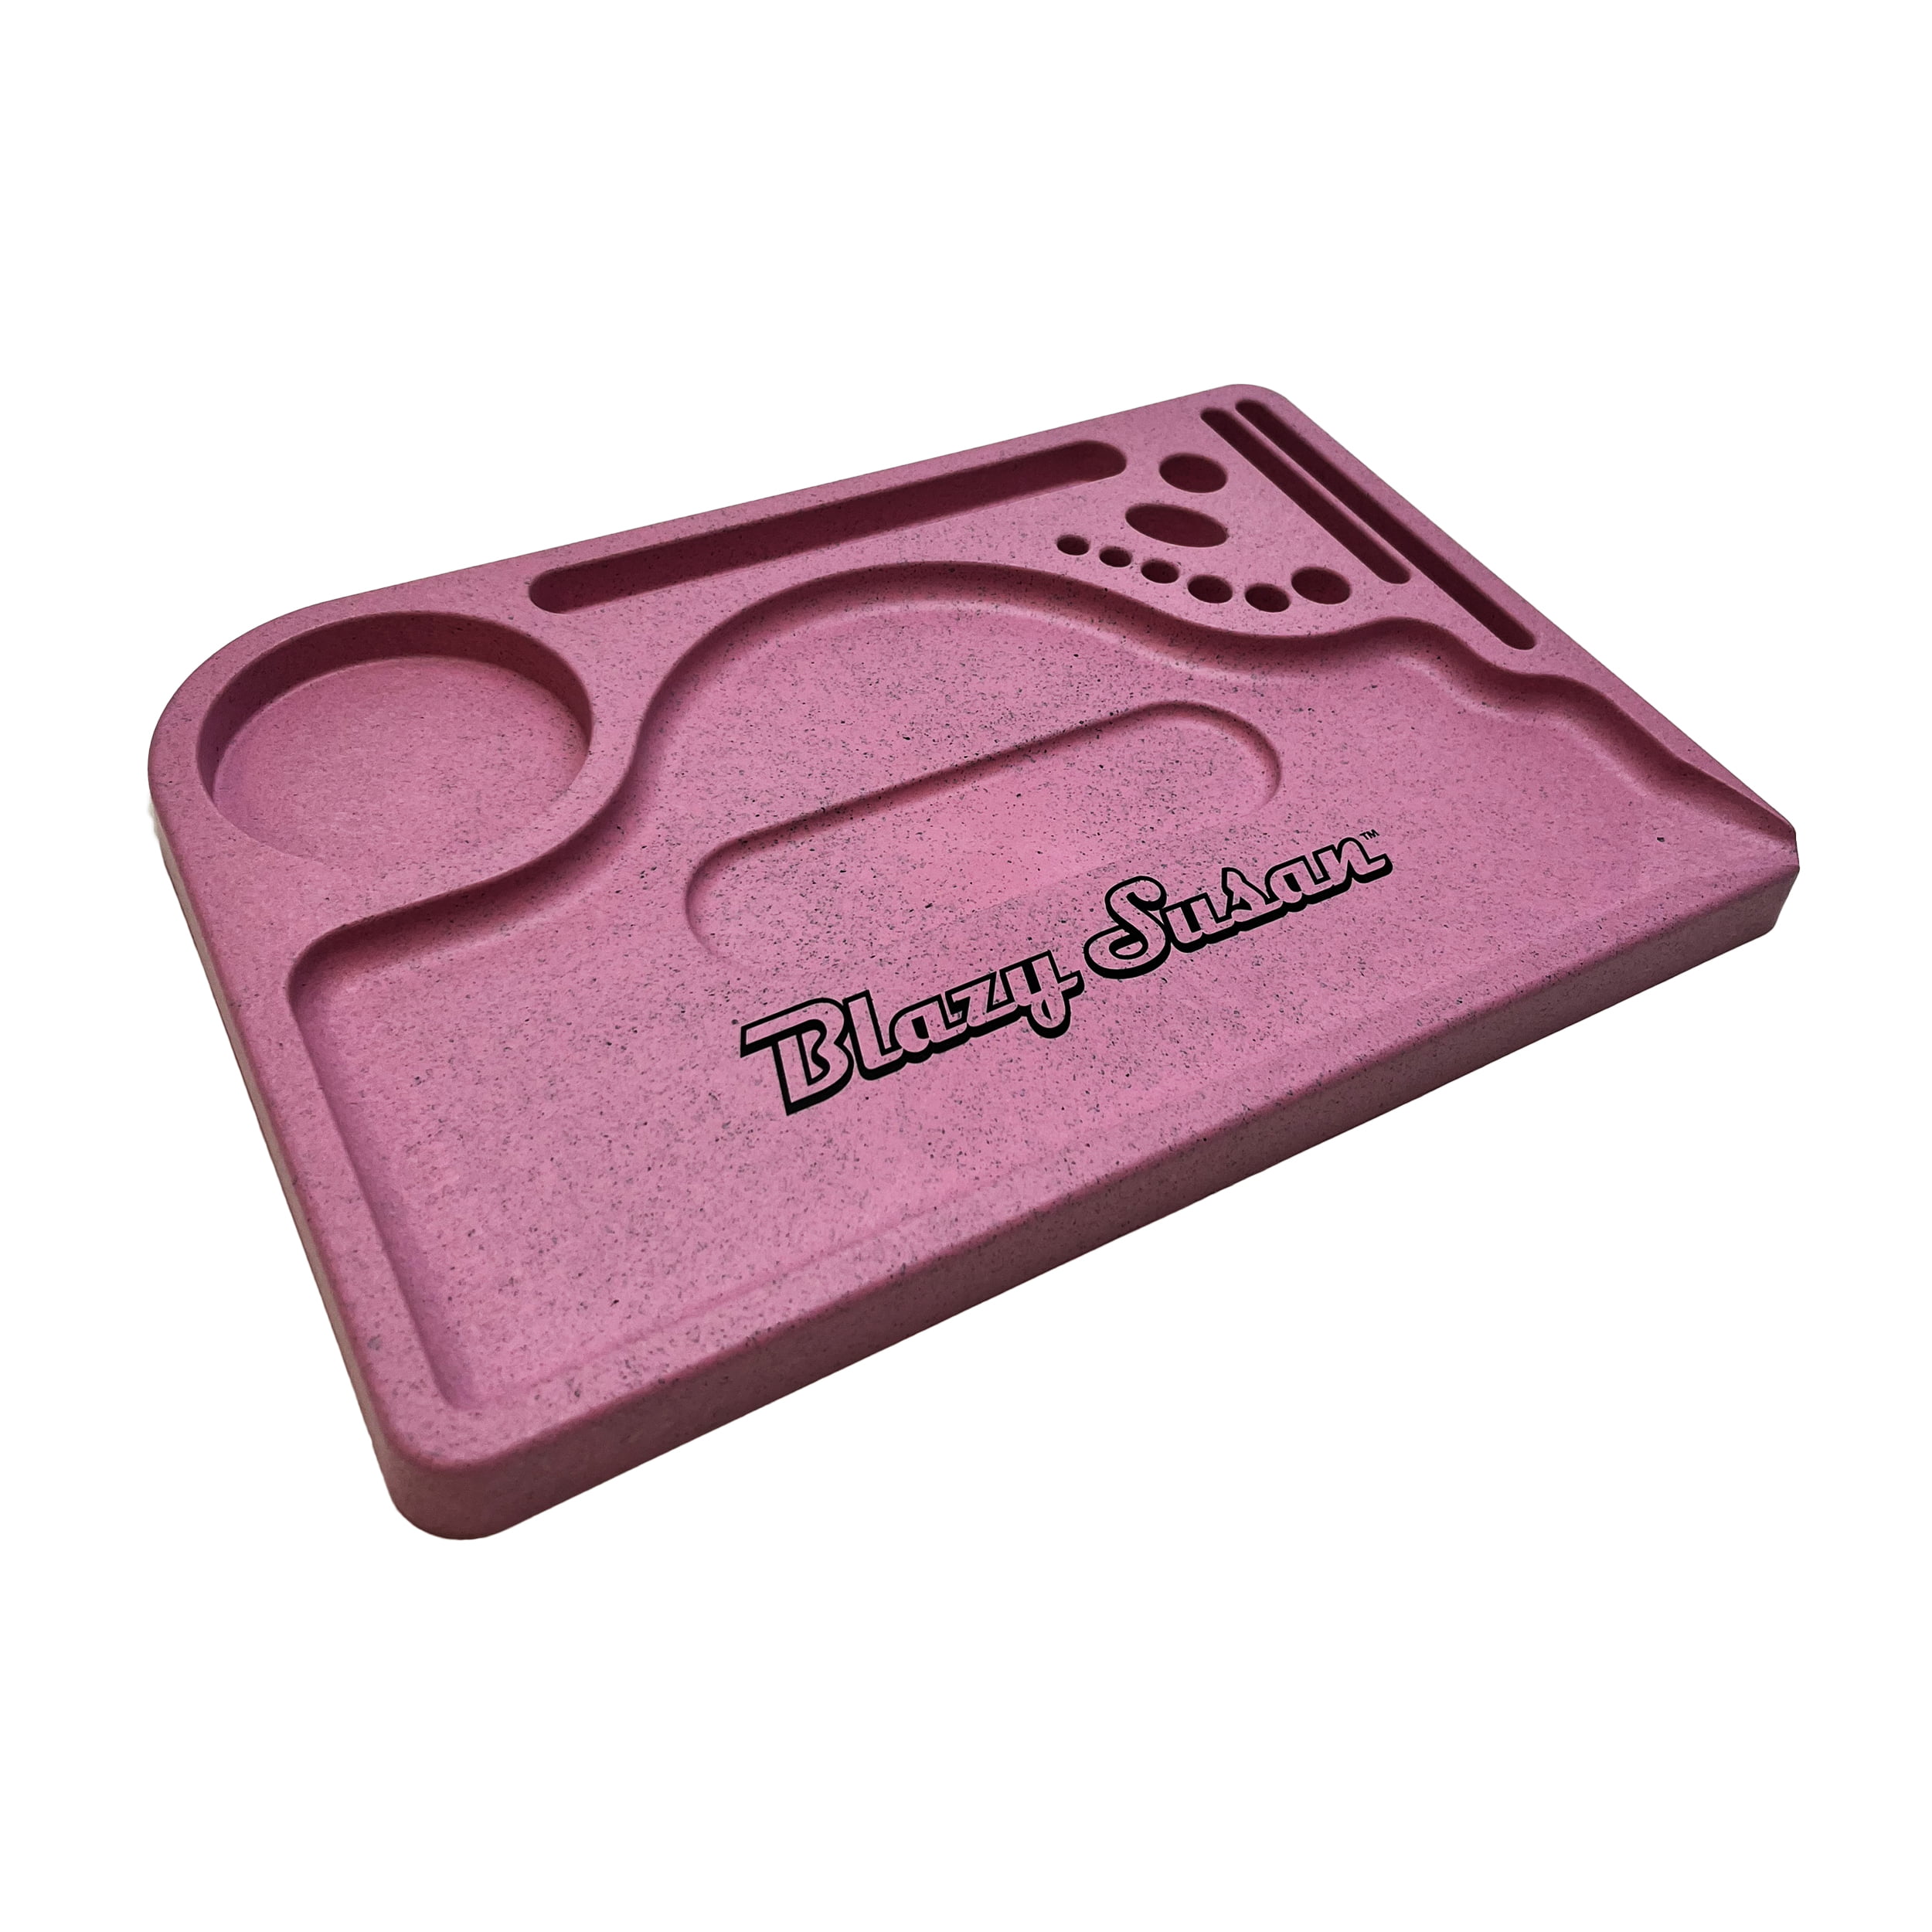 Pink Hemp Plastic Rolling Tray, Blazy Susan